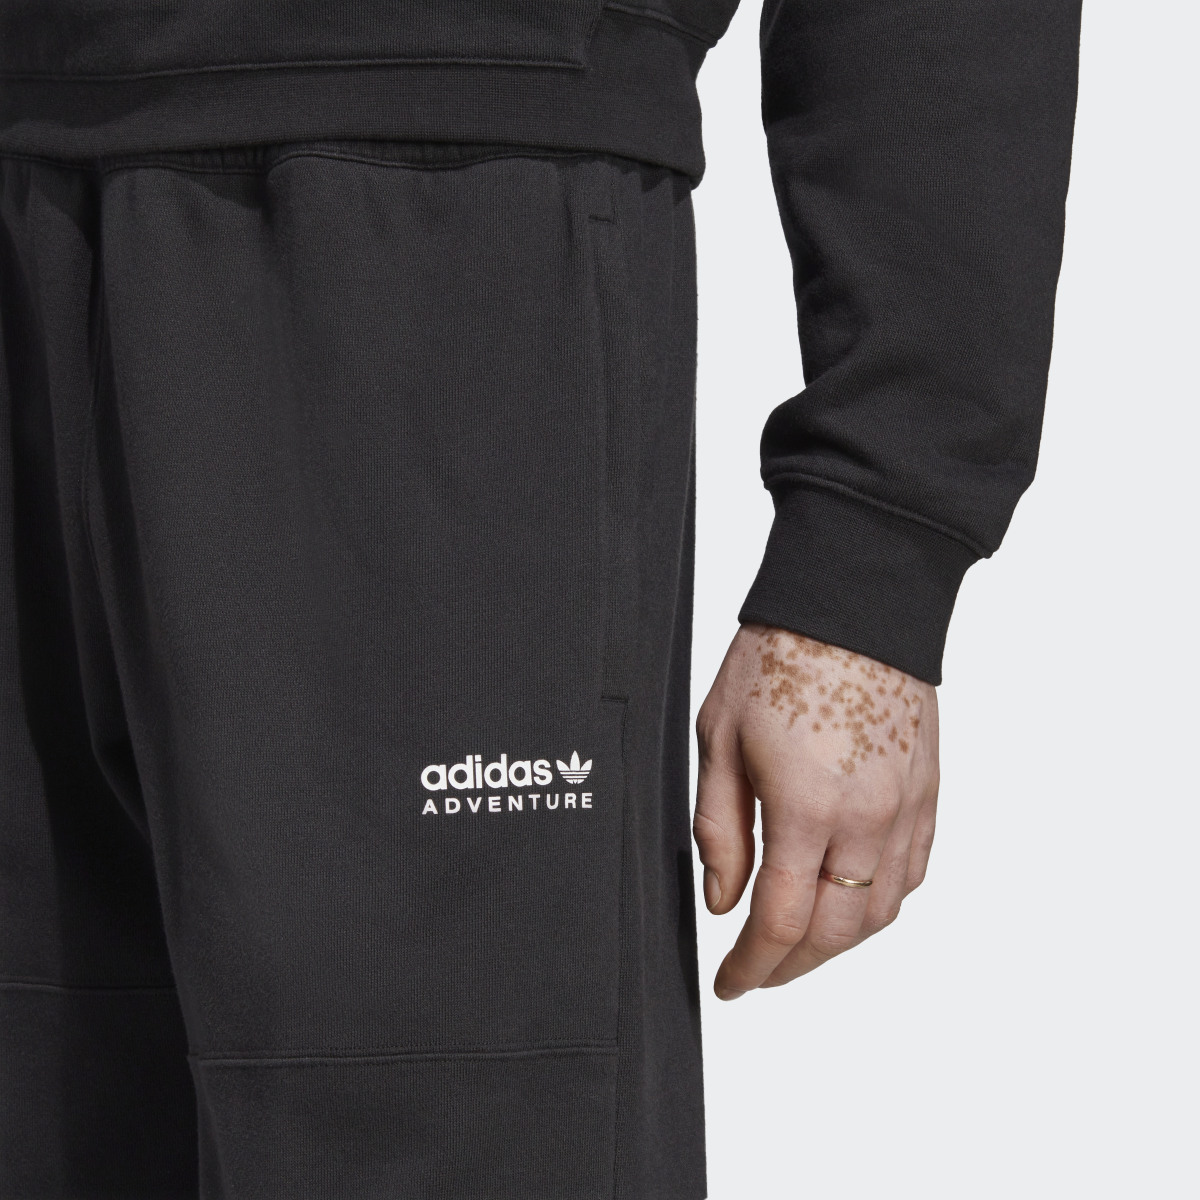 Adidas Adventure Sweat Pants. 6